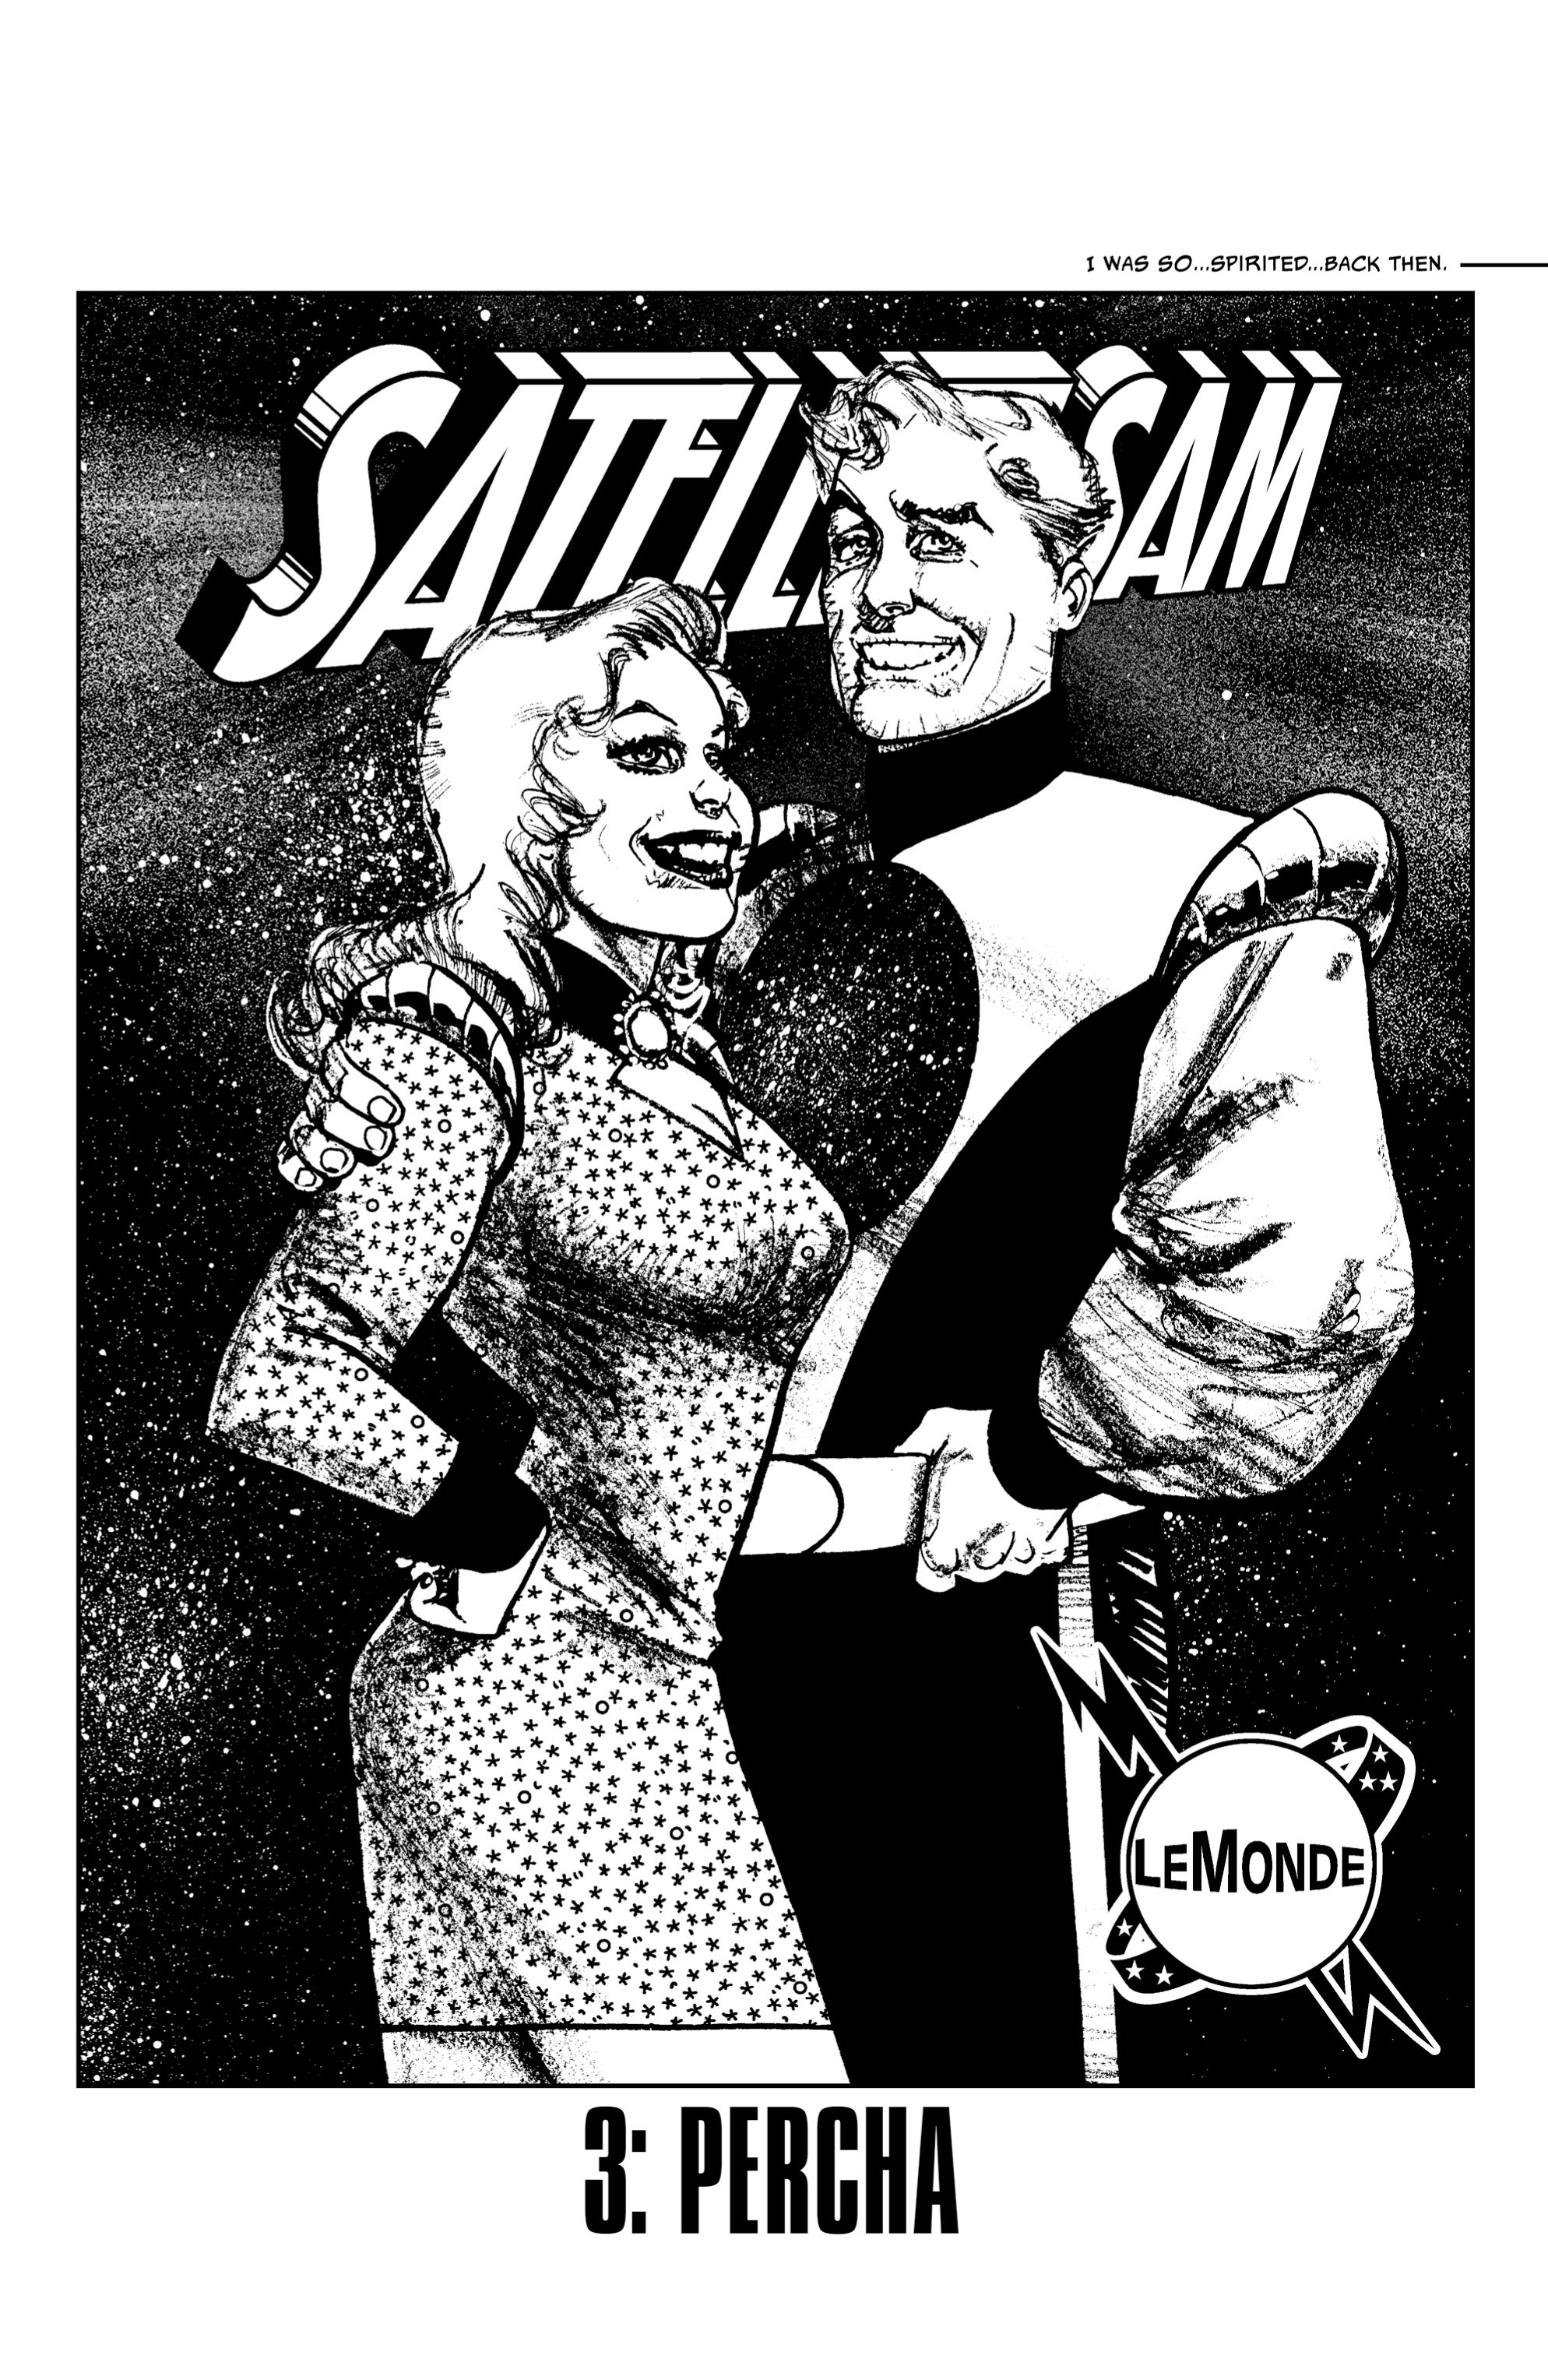 Read online Satellite Sam comic -  Issue #3 - 4